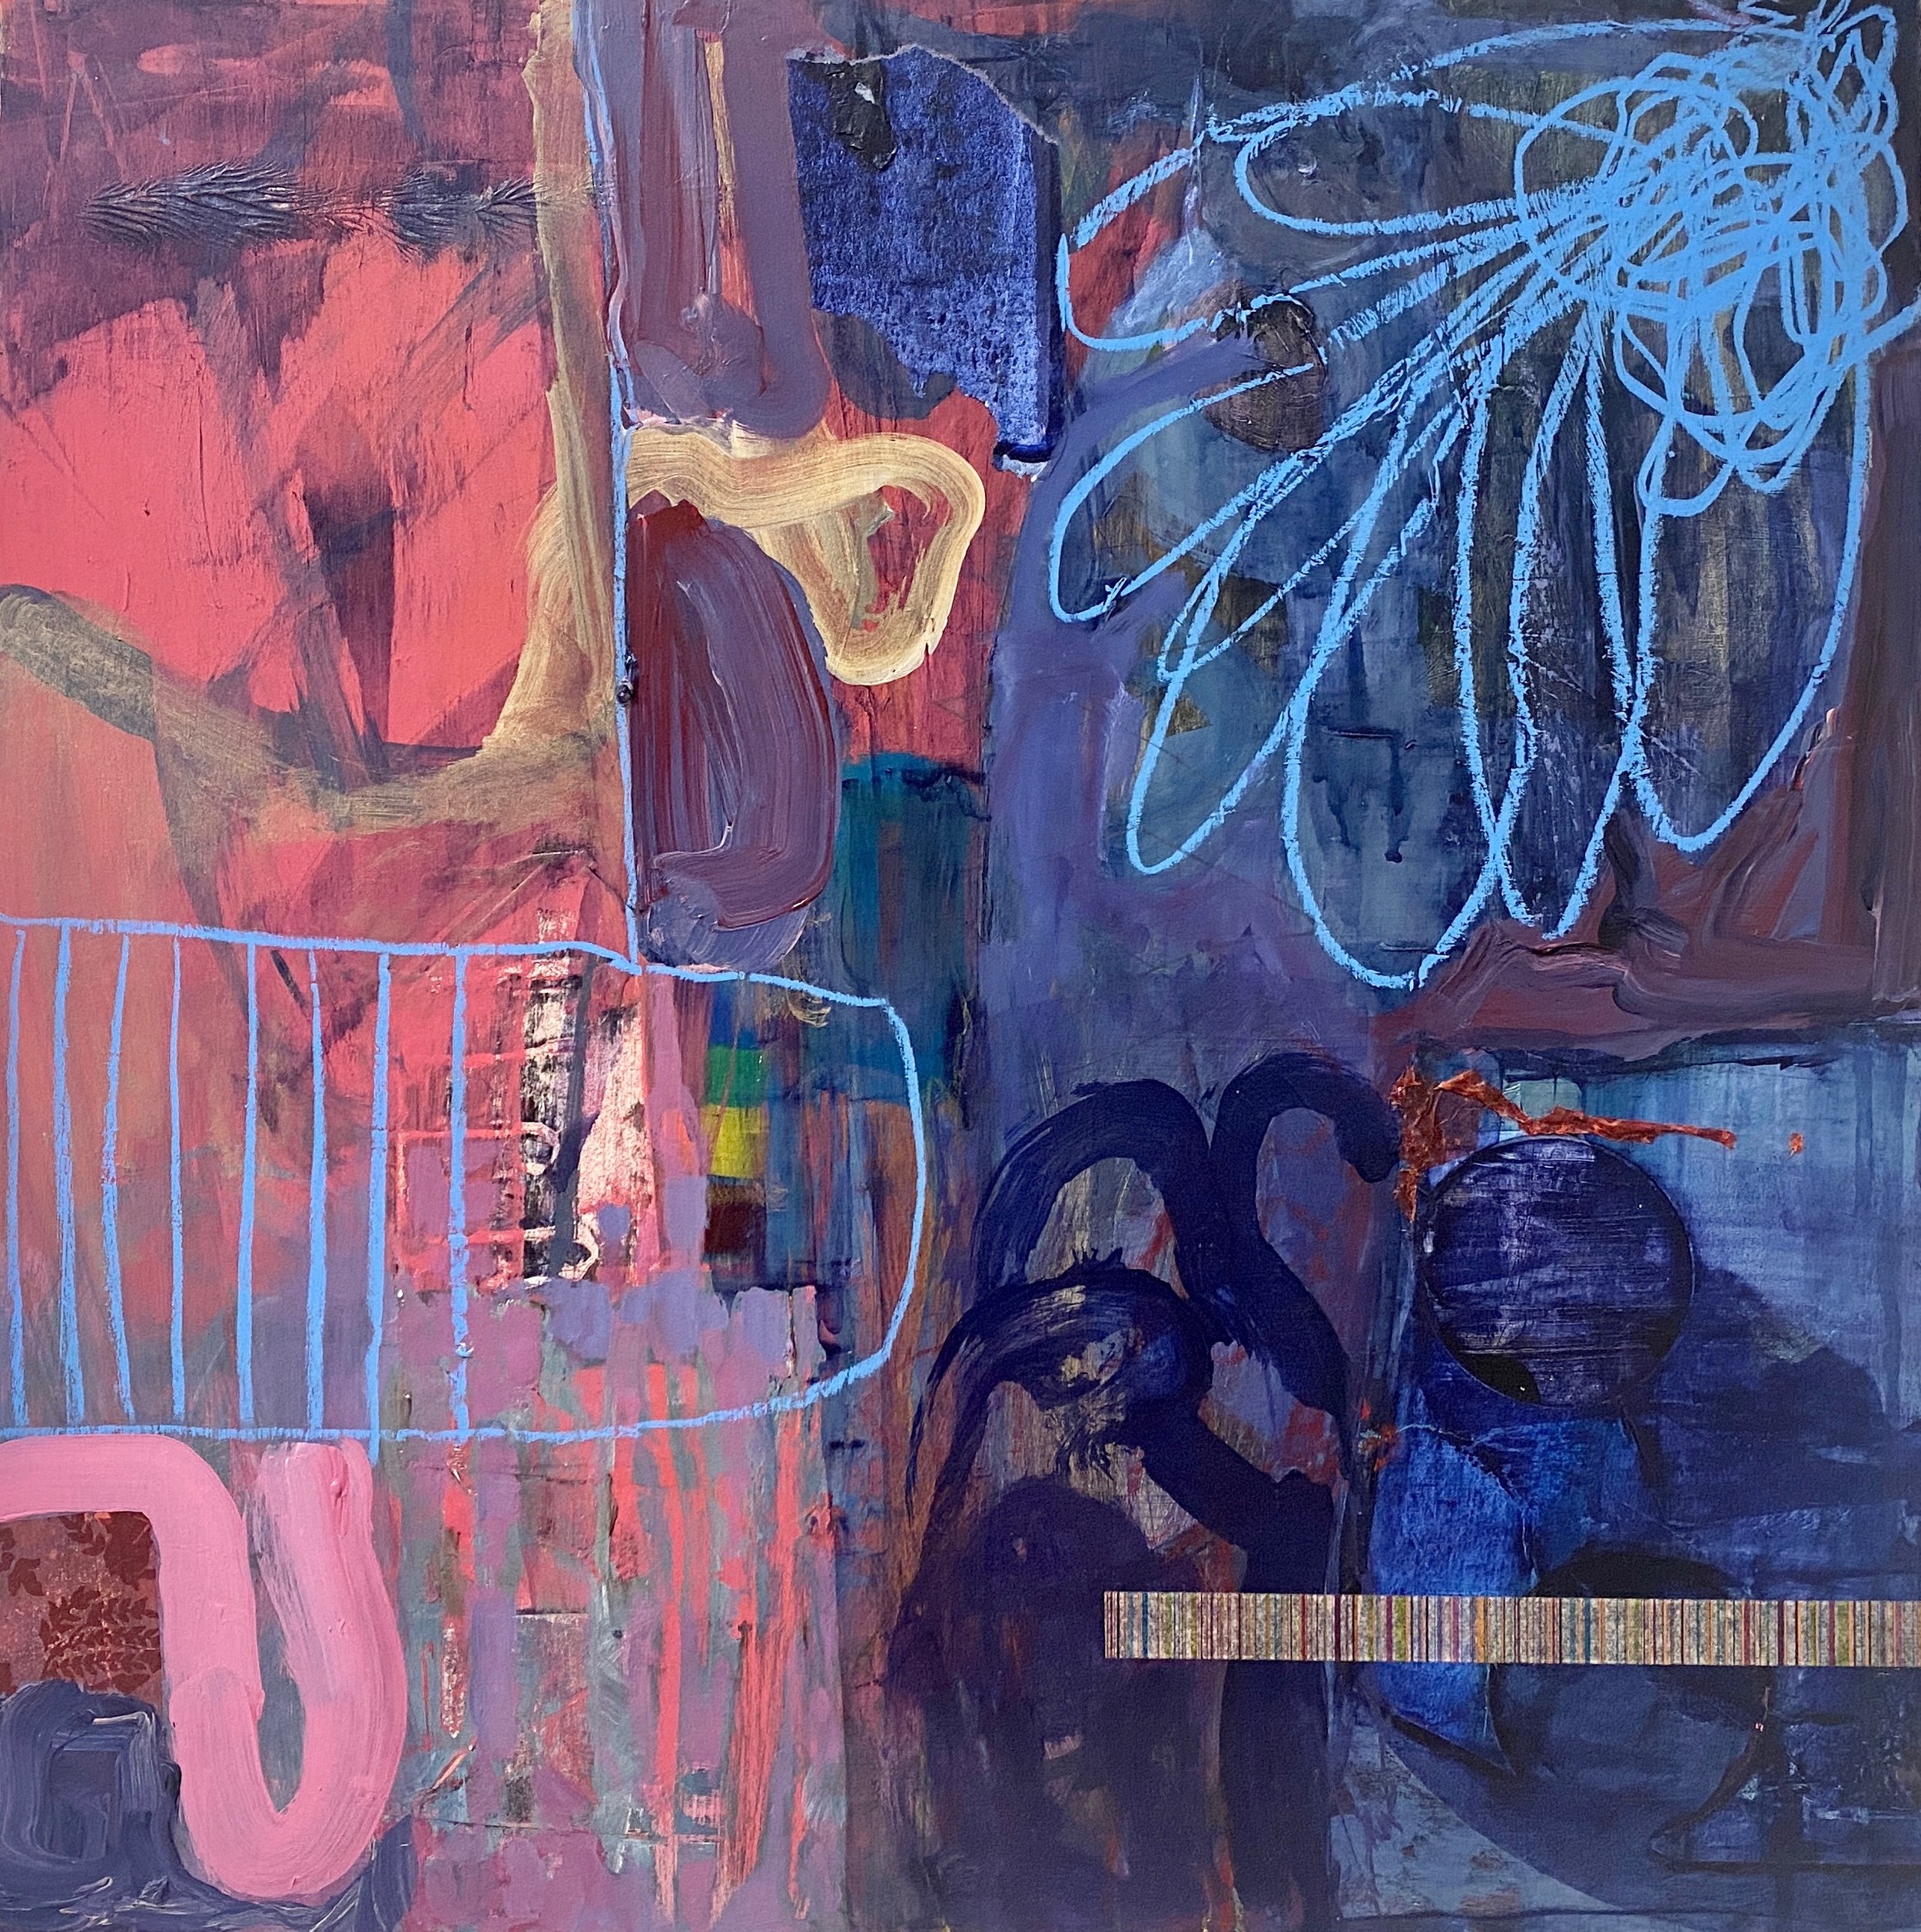  Bleu Clair, mixed media on wood panel, 18x18 